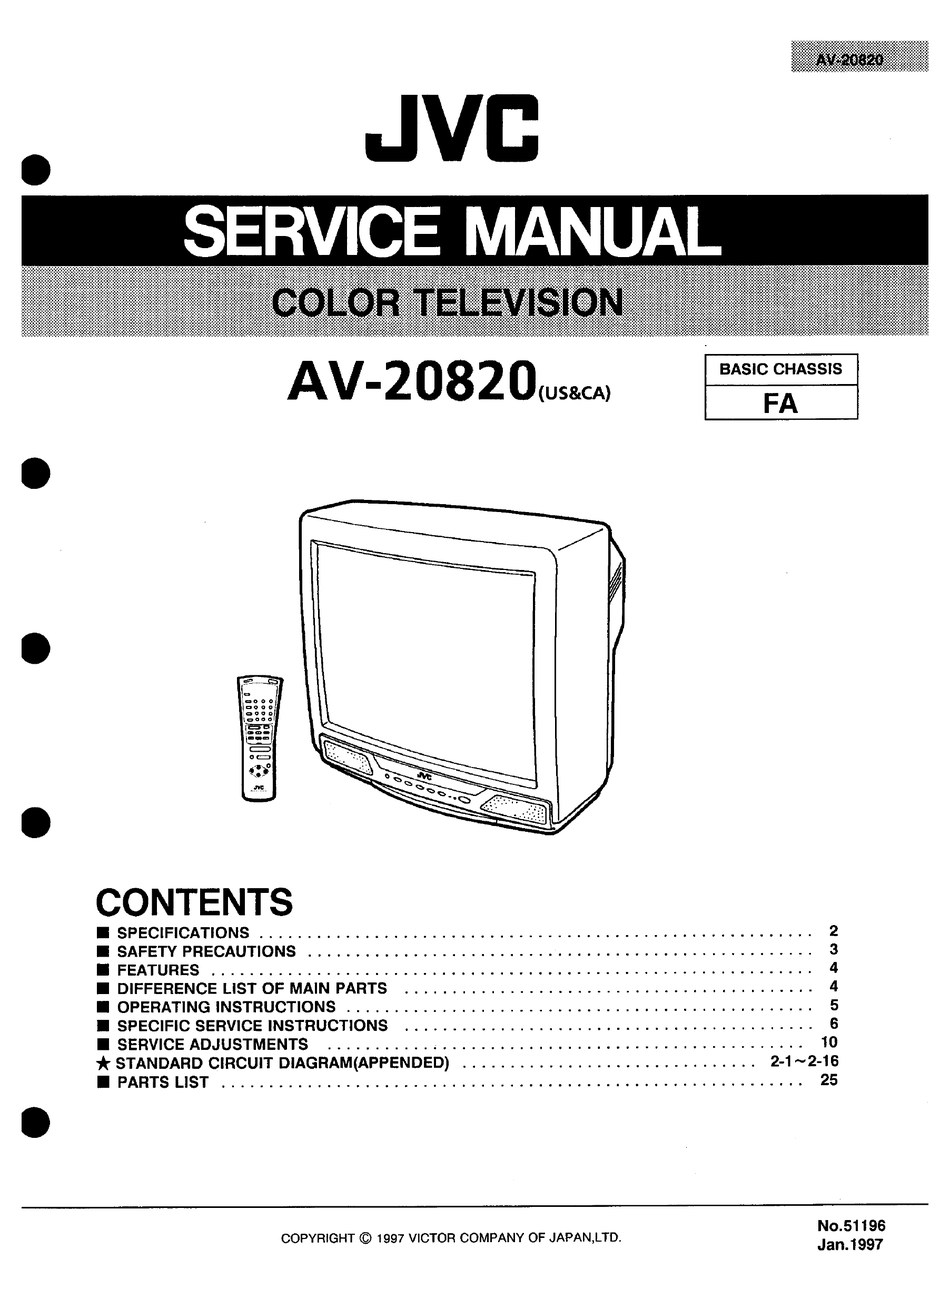 JVC AV-20820 SERVICE MANUAL Pdf Download | ManualsLib